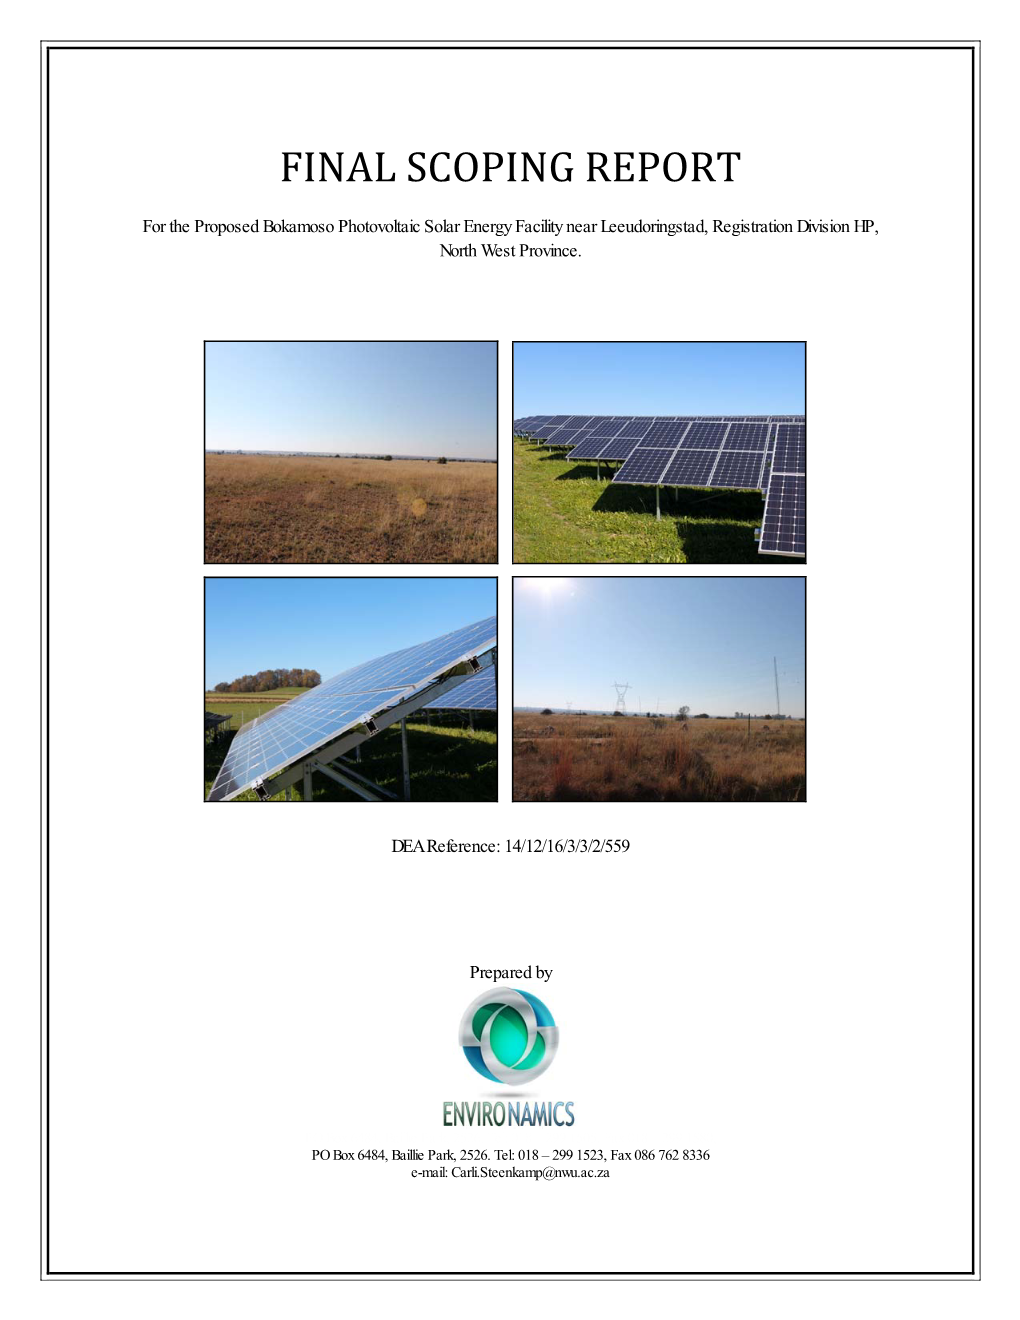 Final Scoping Report